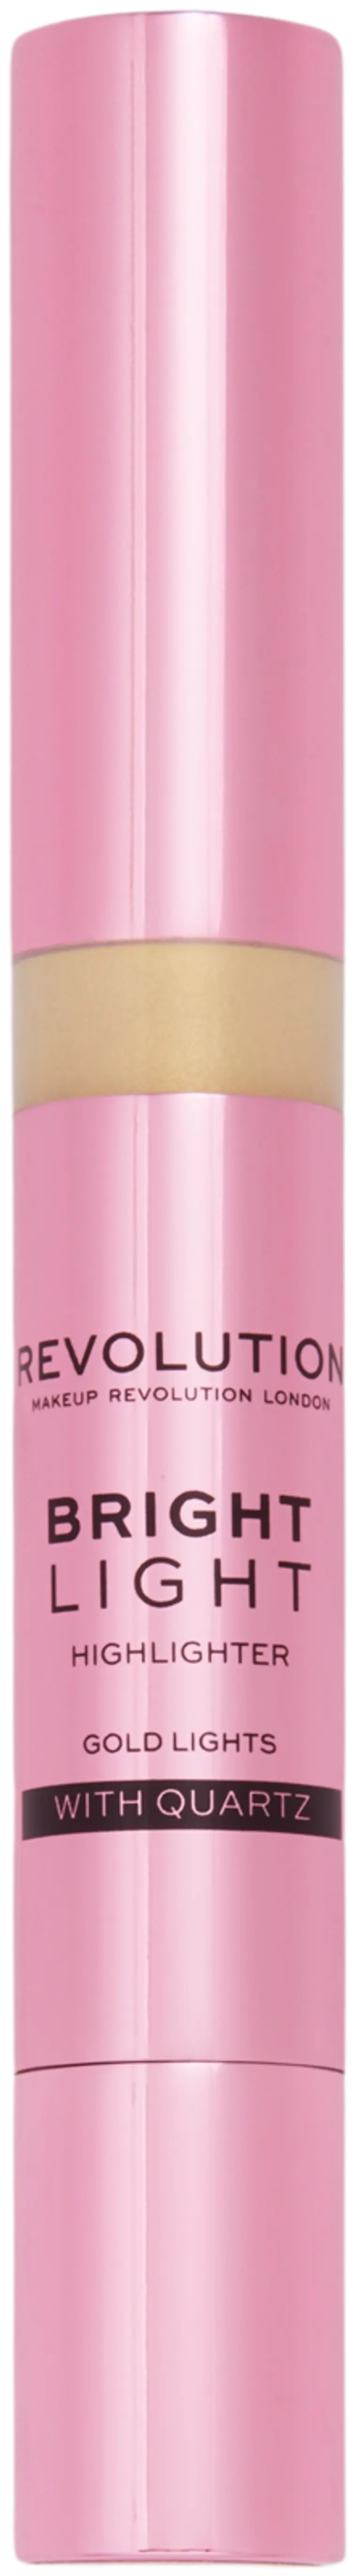 Makeup Revolution | Prisma verkkokauppa